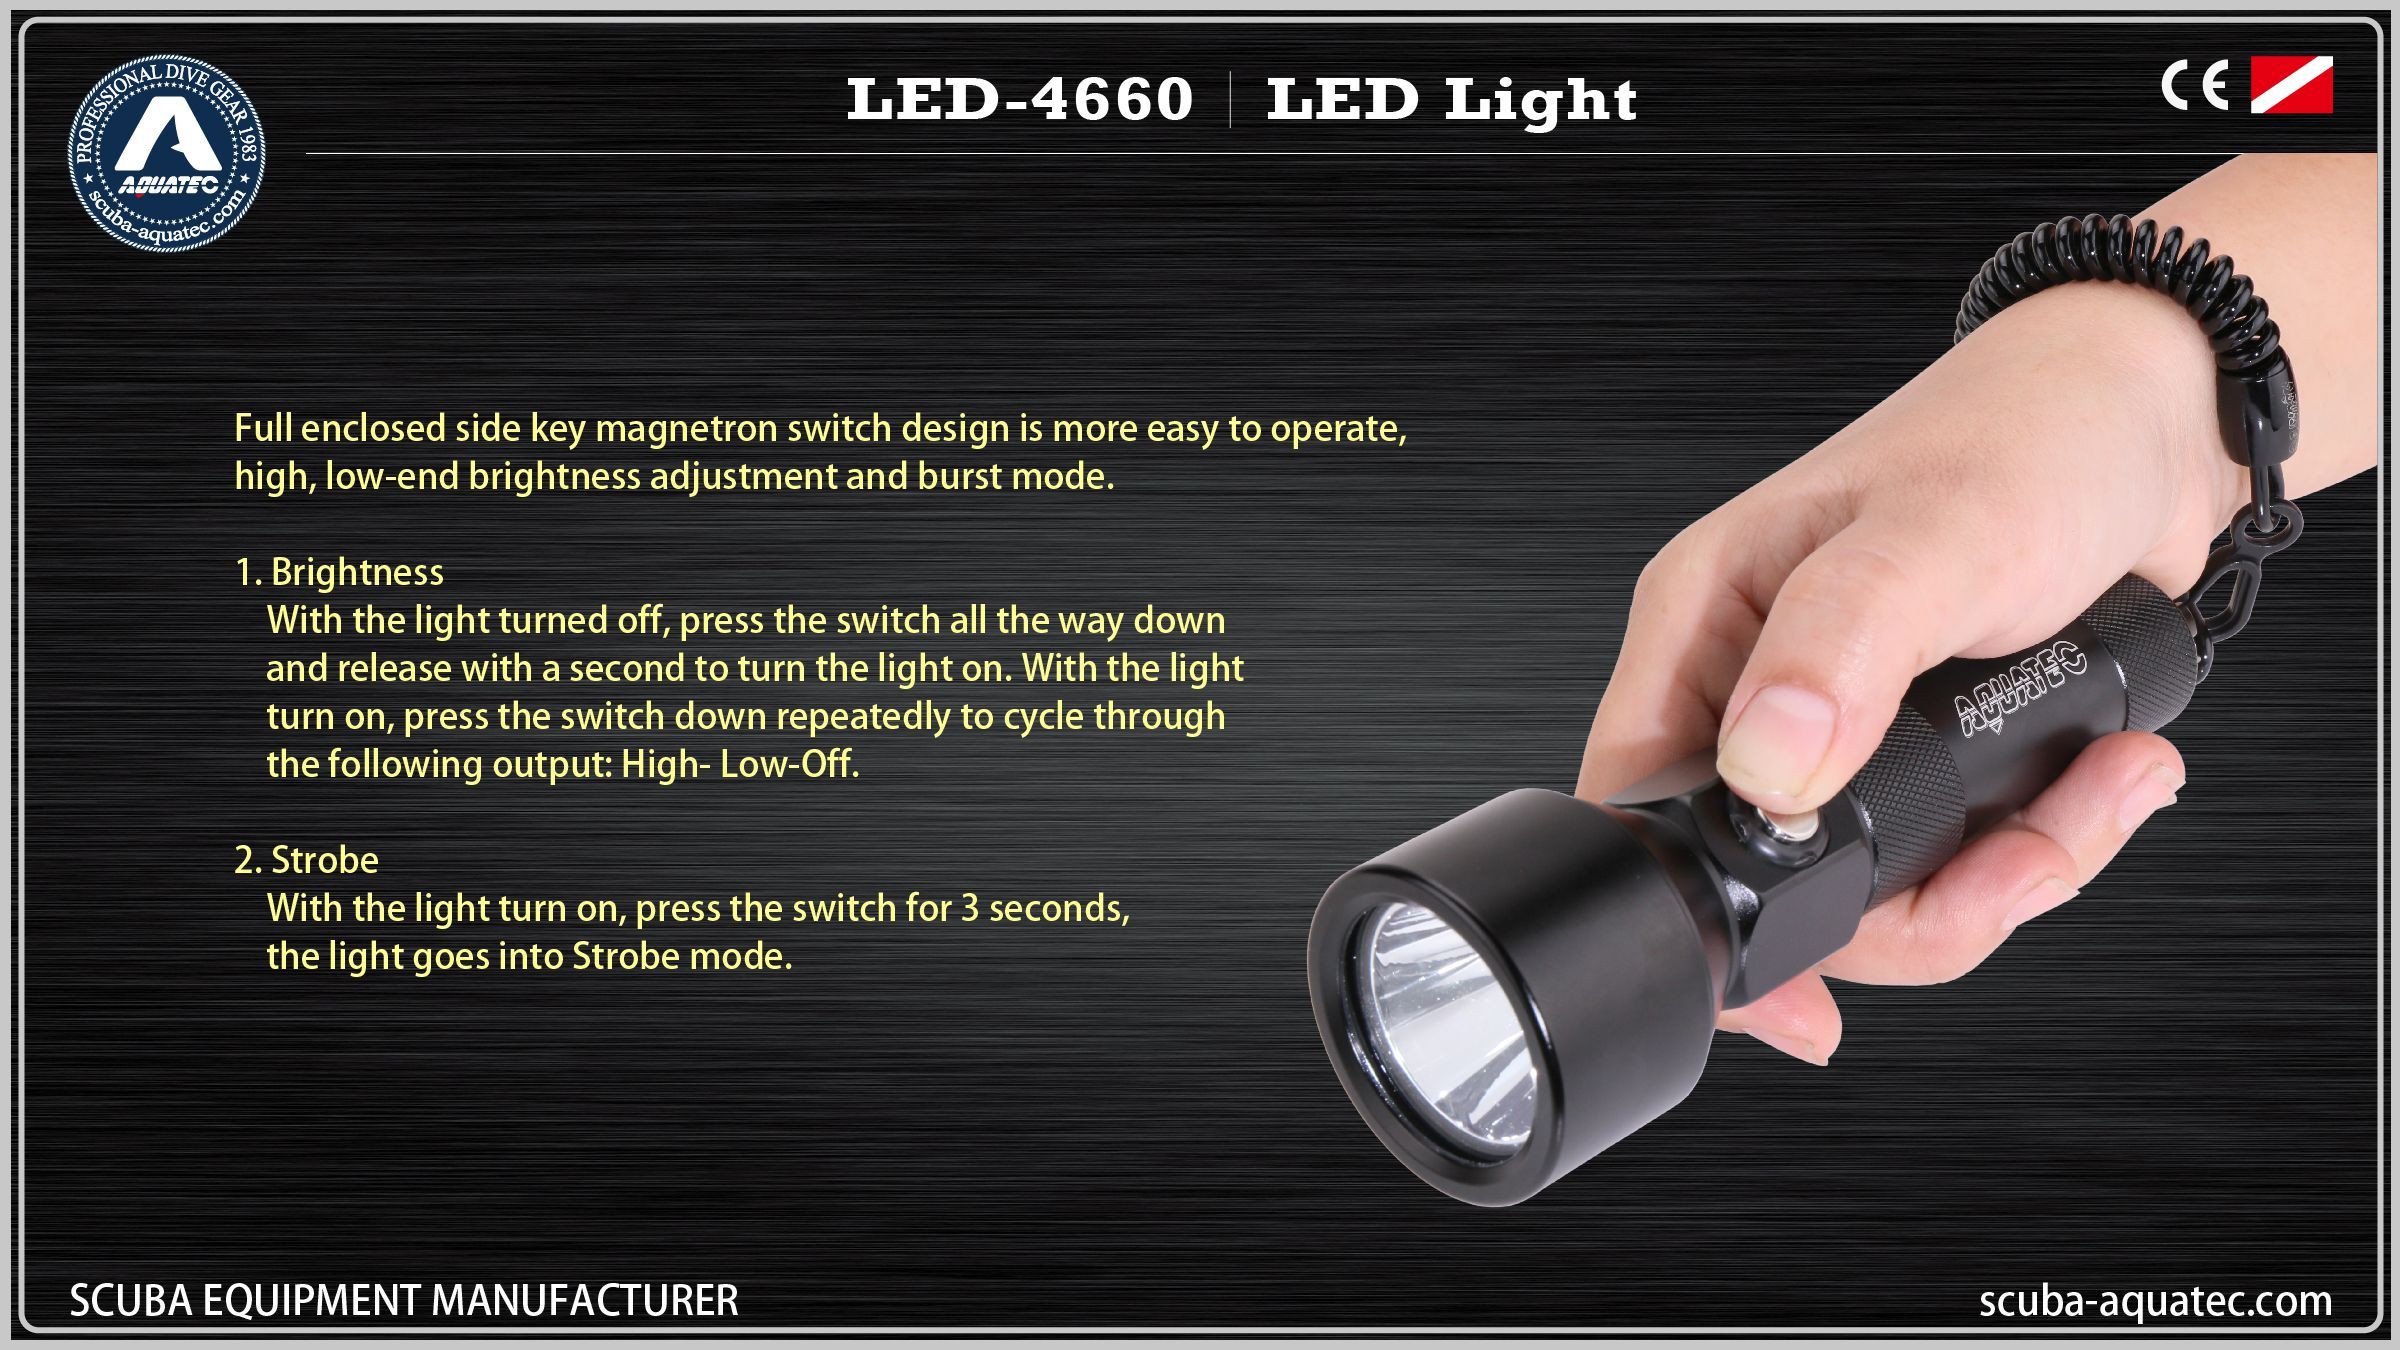 Subaquatic LED Torch